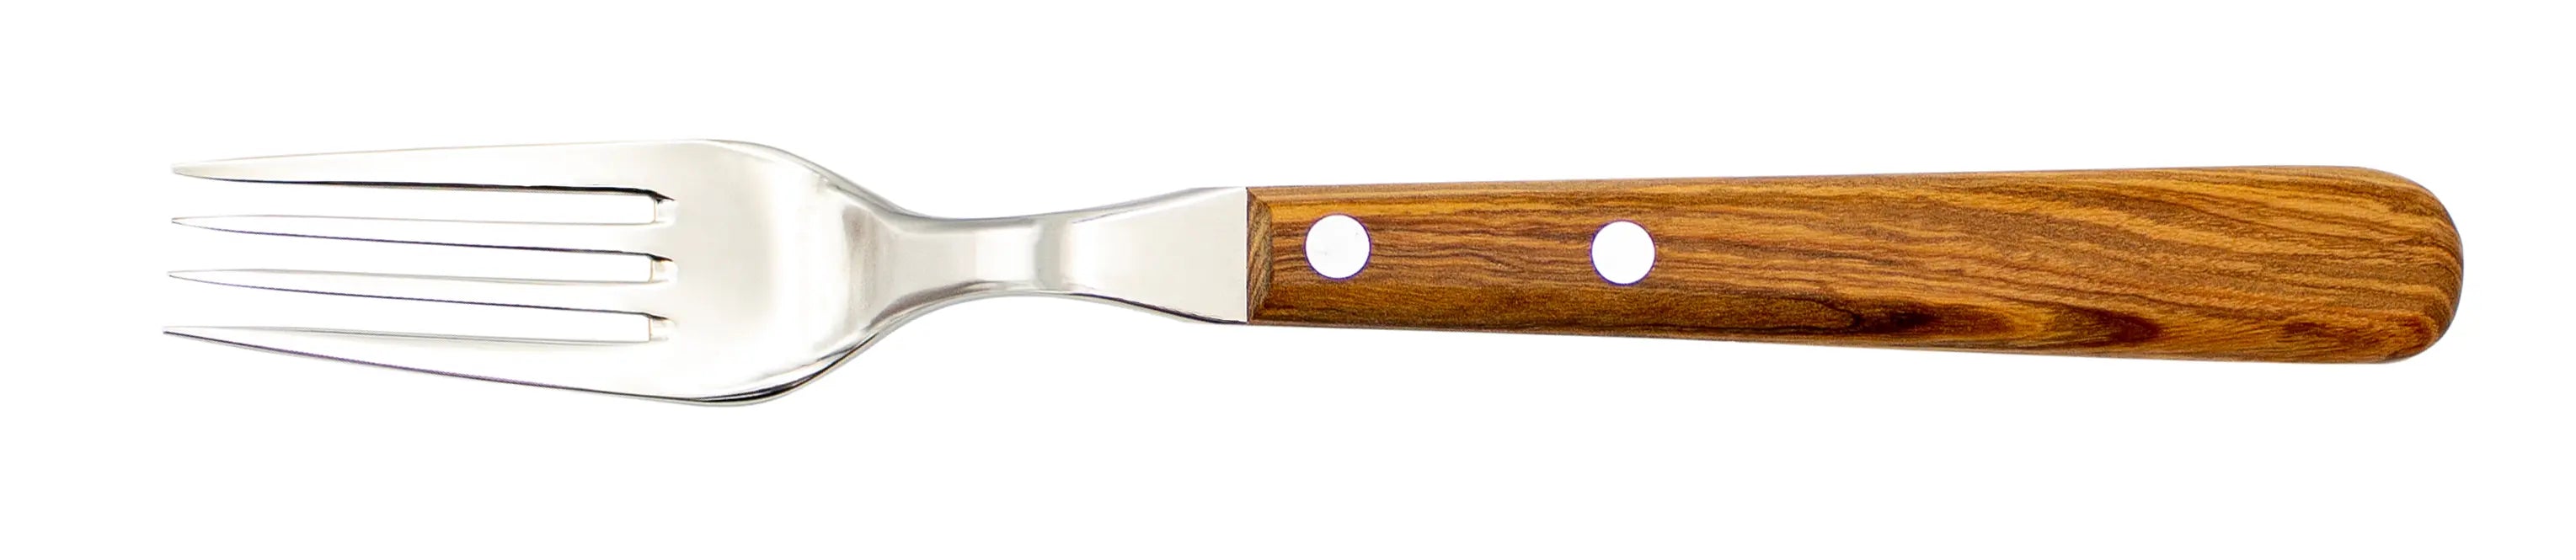 Gabel &amp; Brotzeitmesser mit Olivenholz - Rostfrei